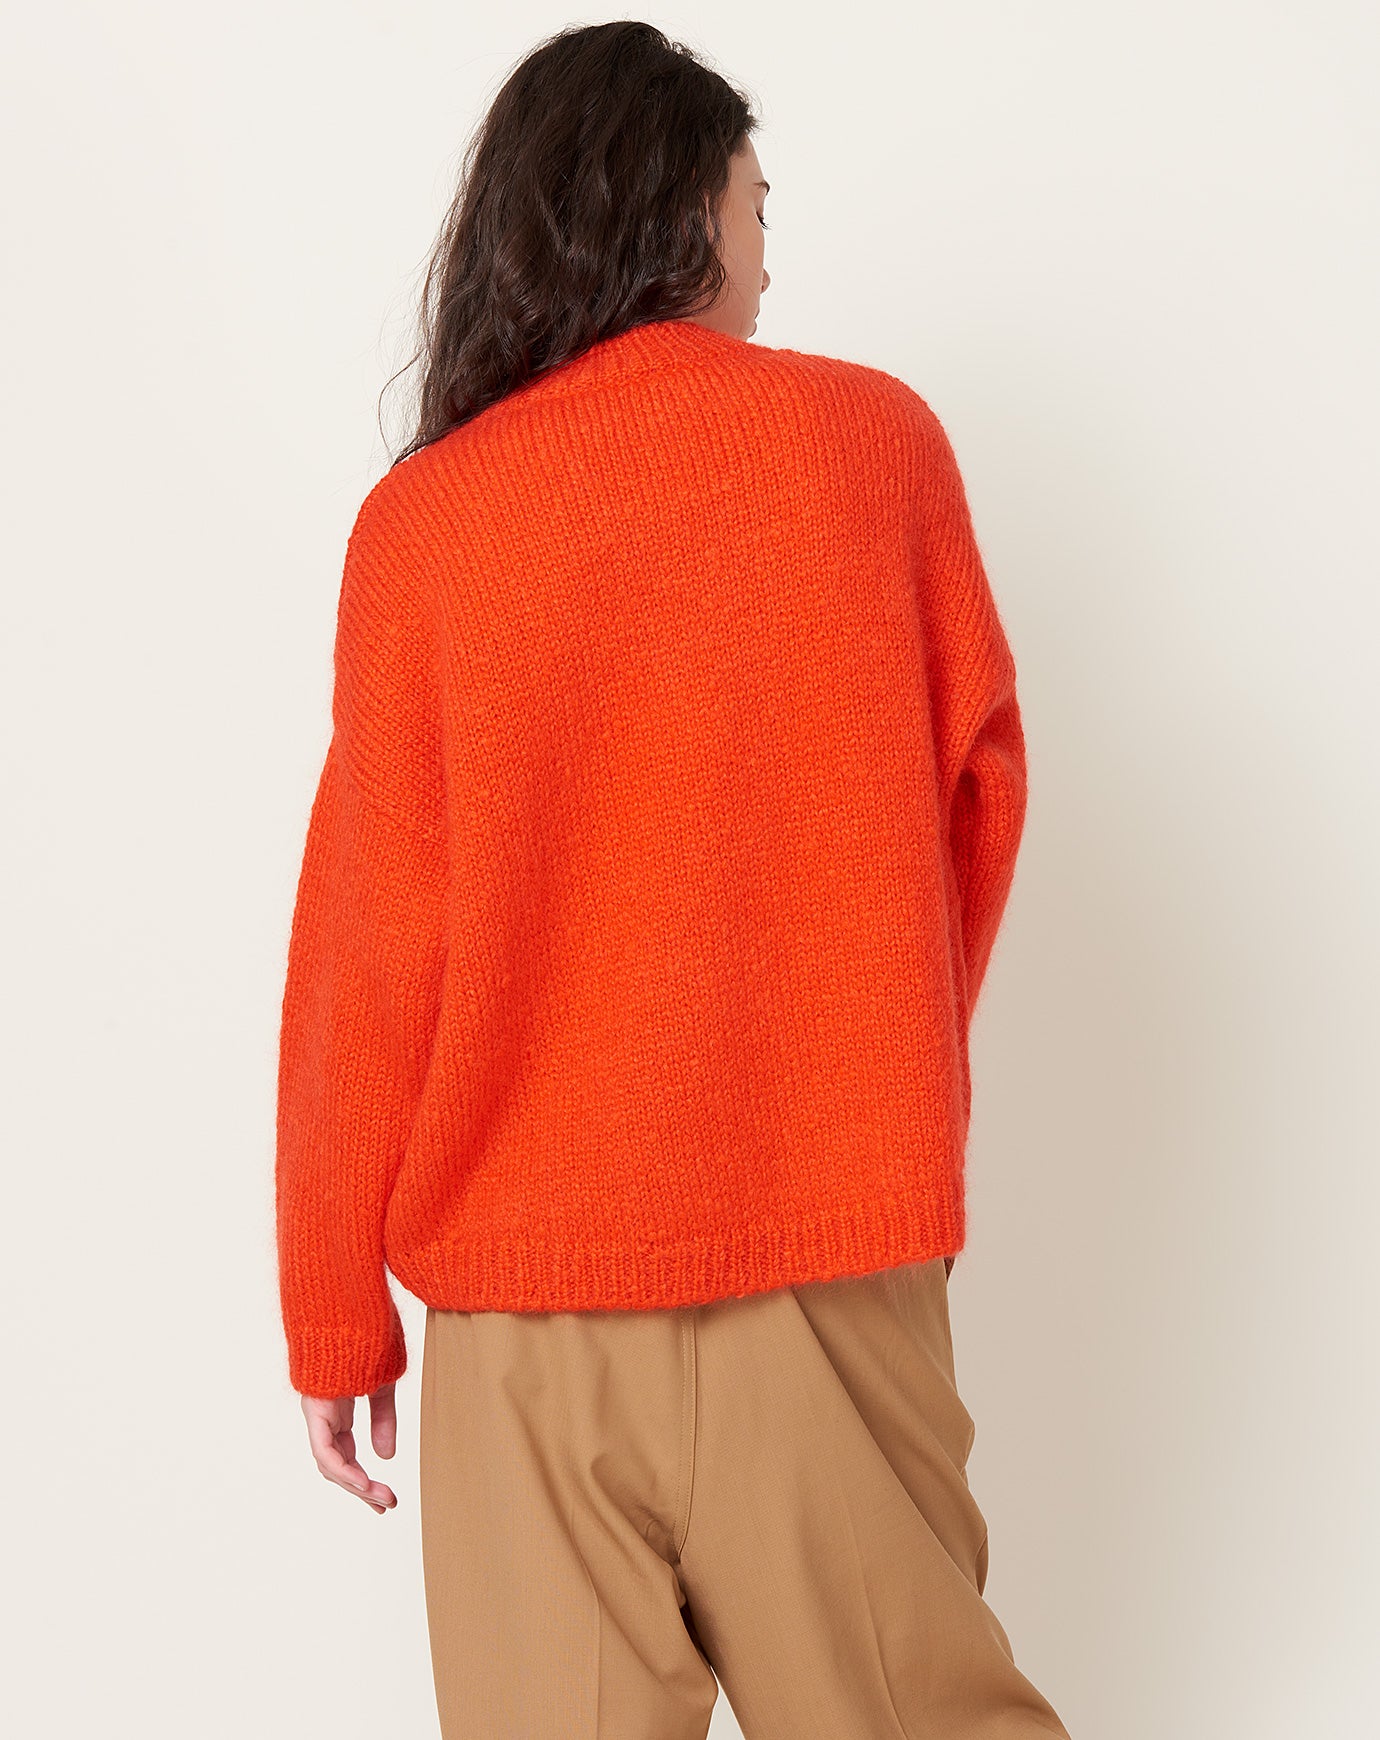 Cordera Mohair Sweater in Tangerine